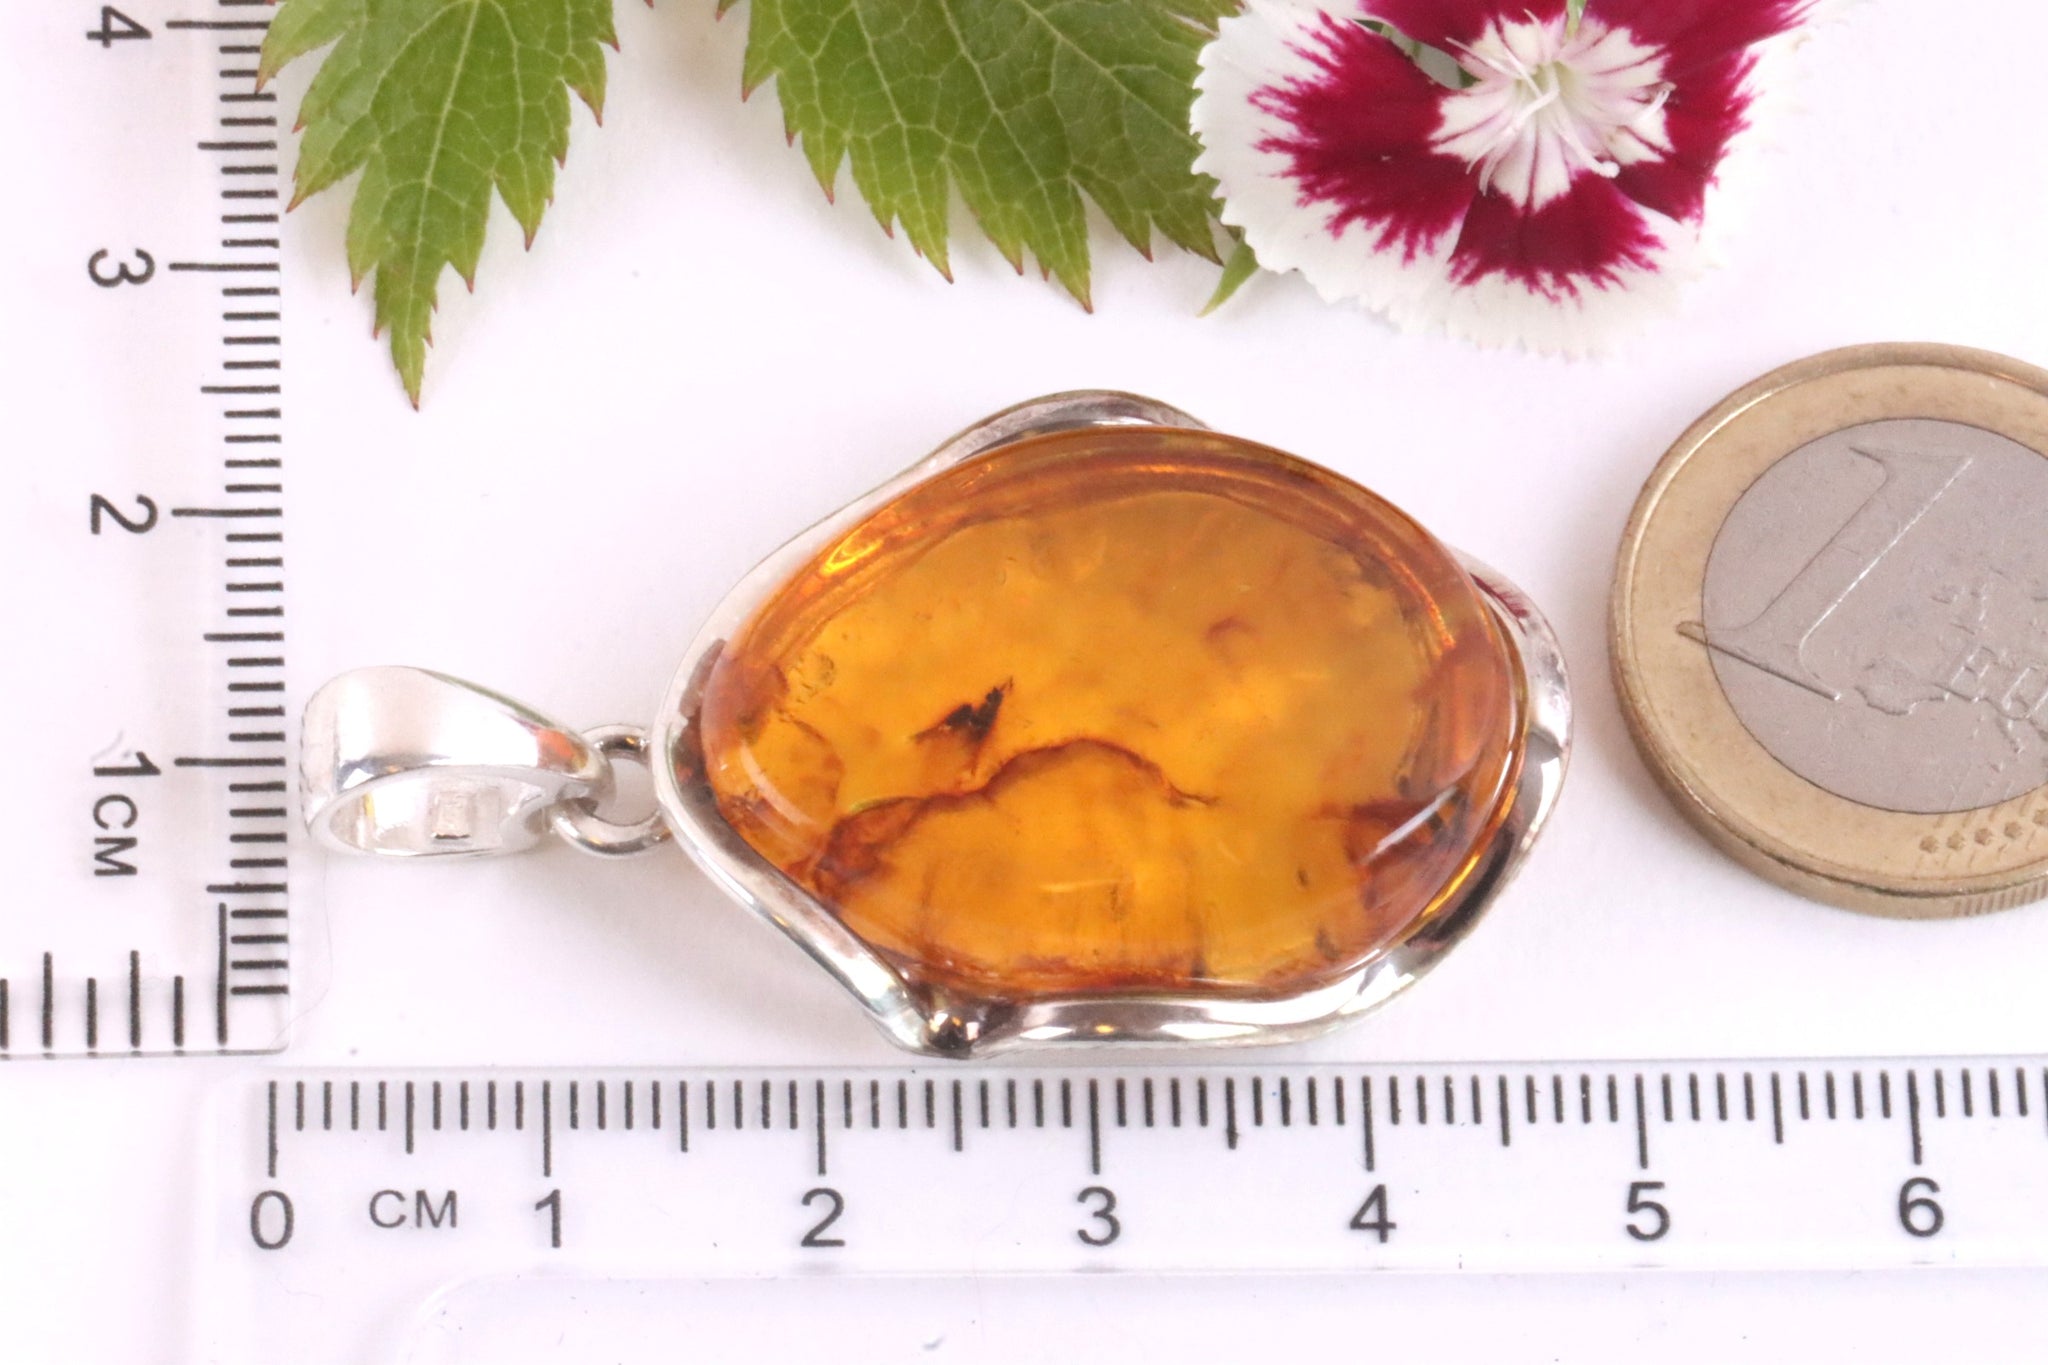 Honey Baltic Amber Gemstone Pendant